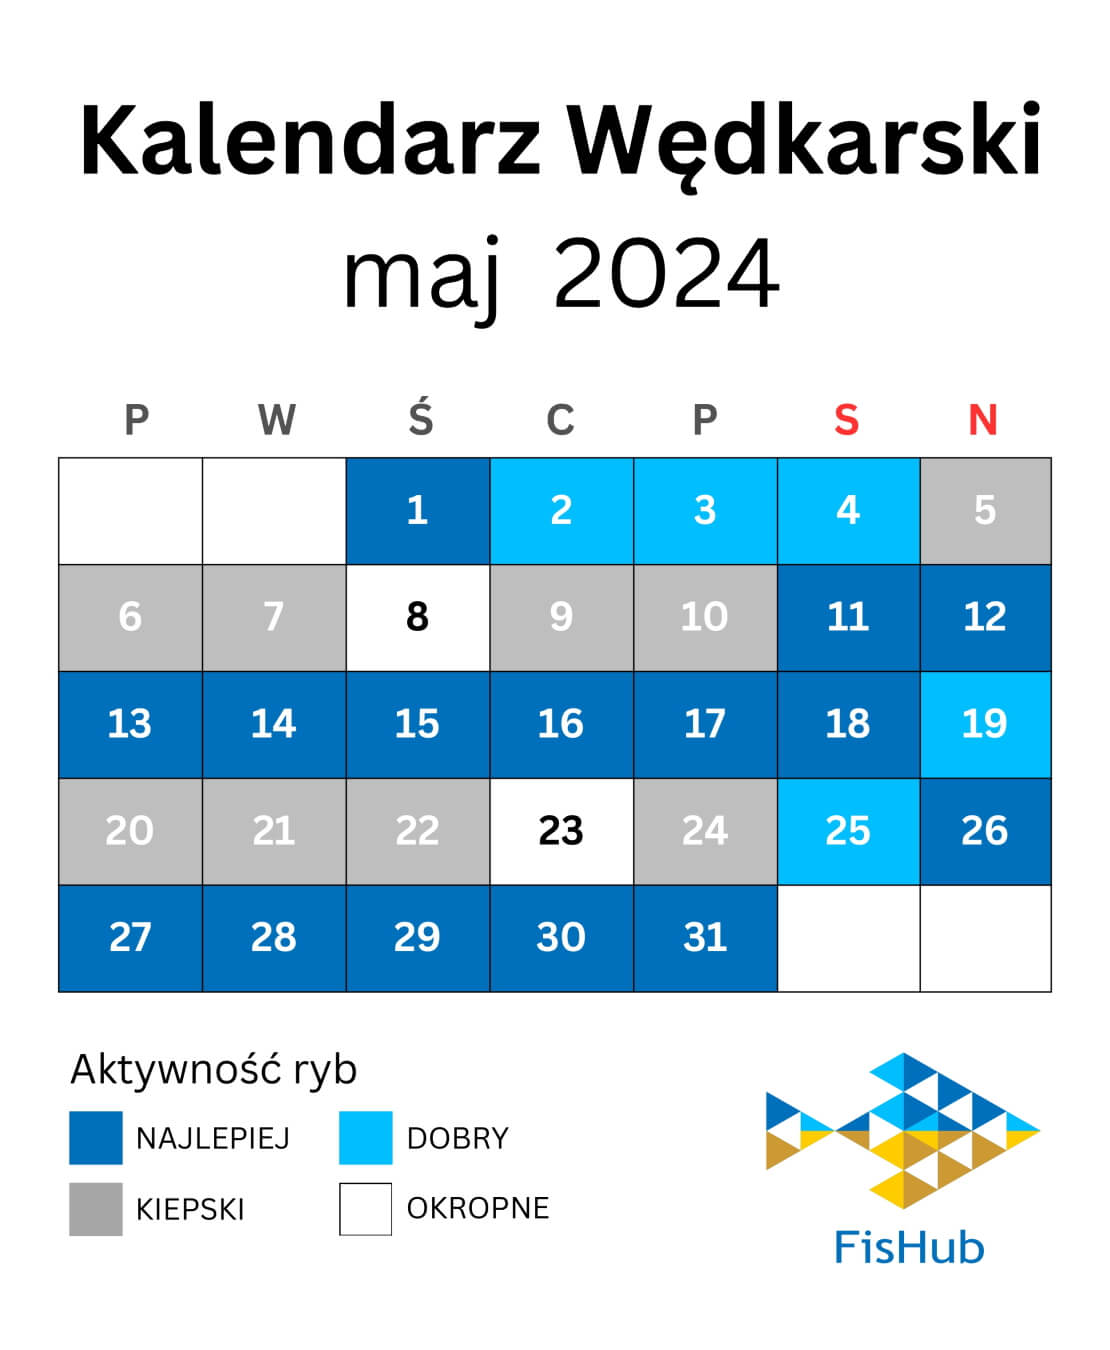 Kalendarz rybacki na maj 2024